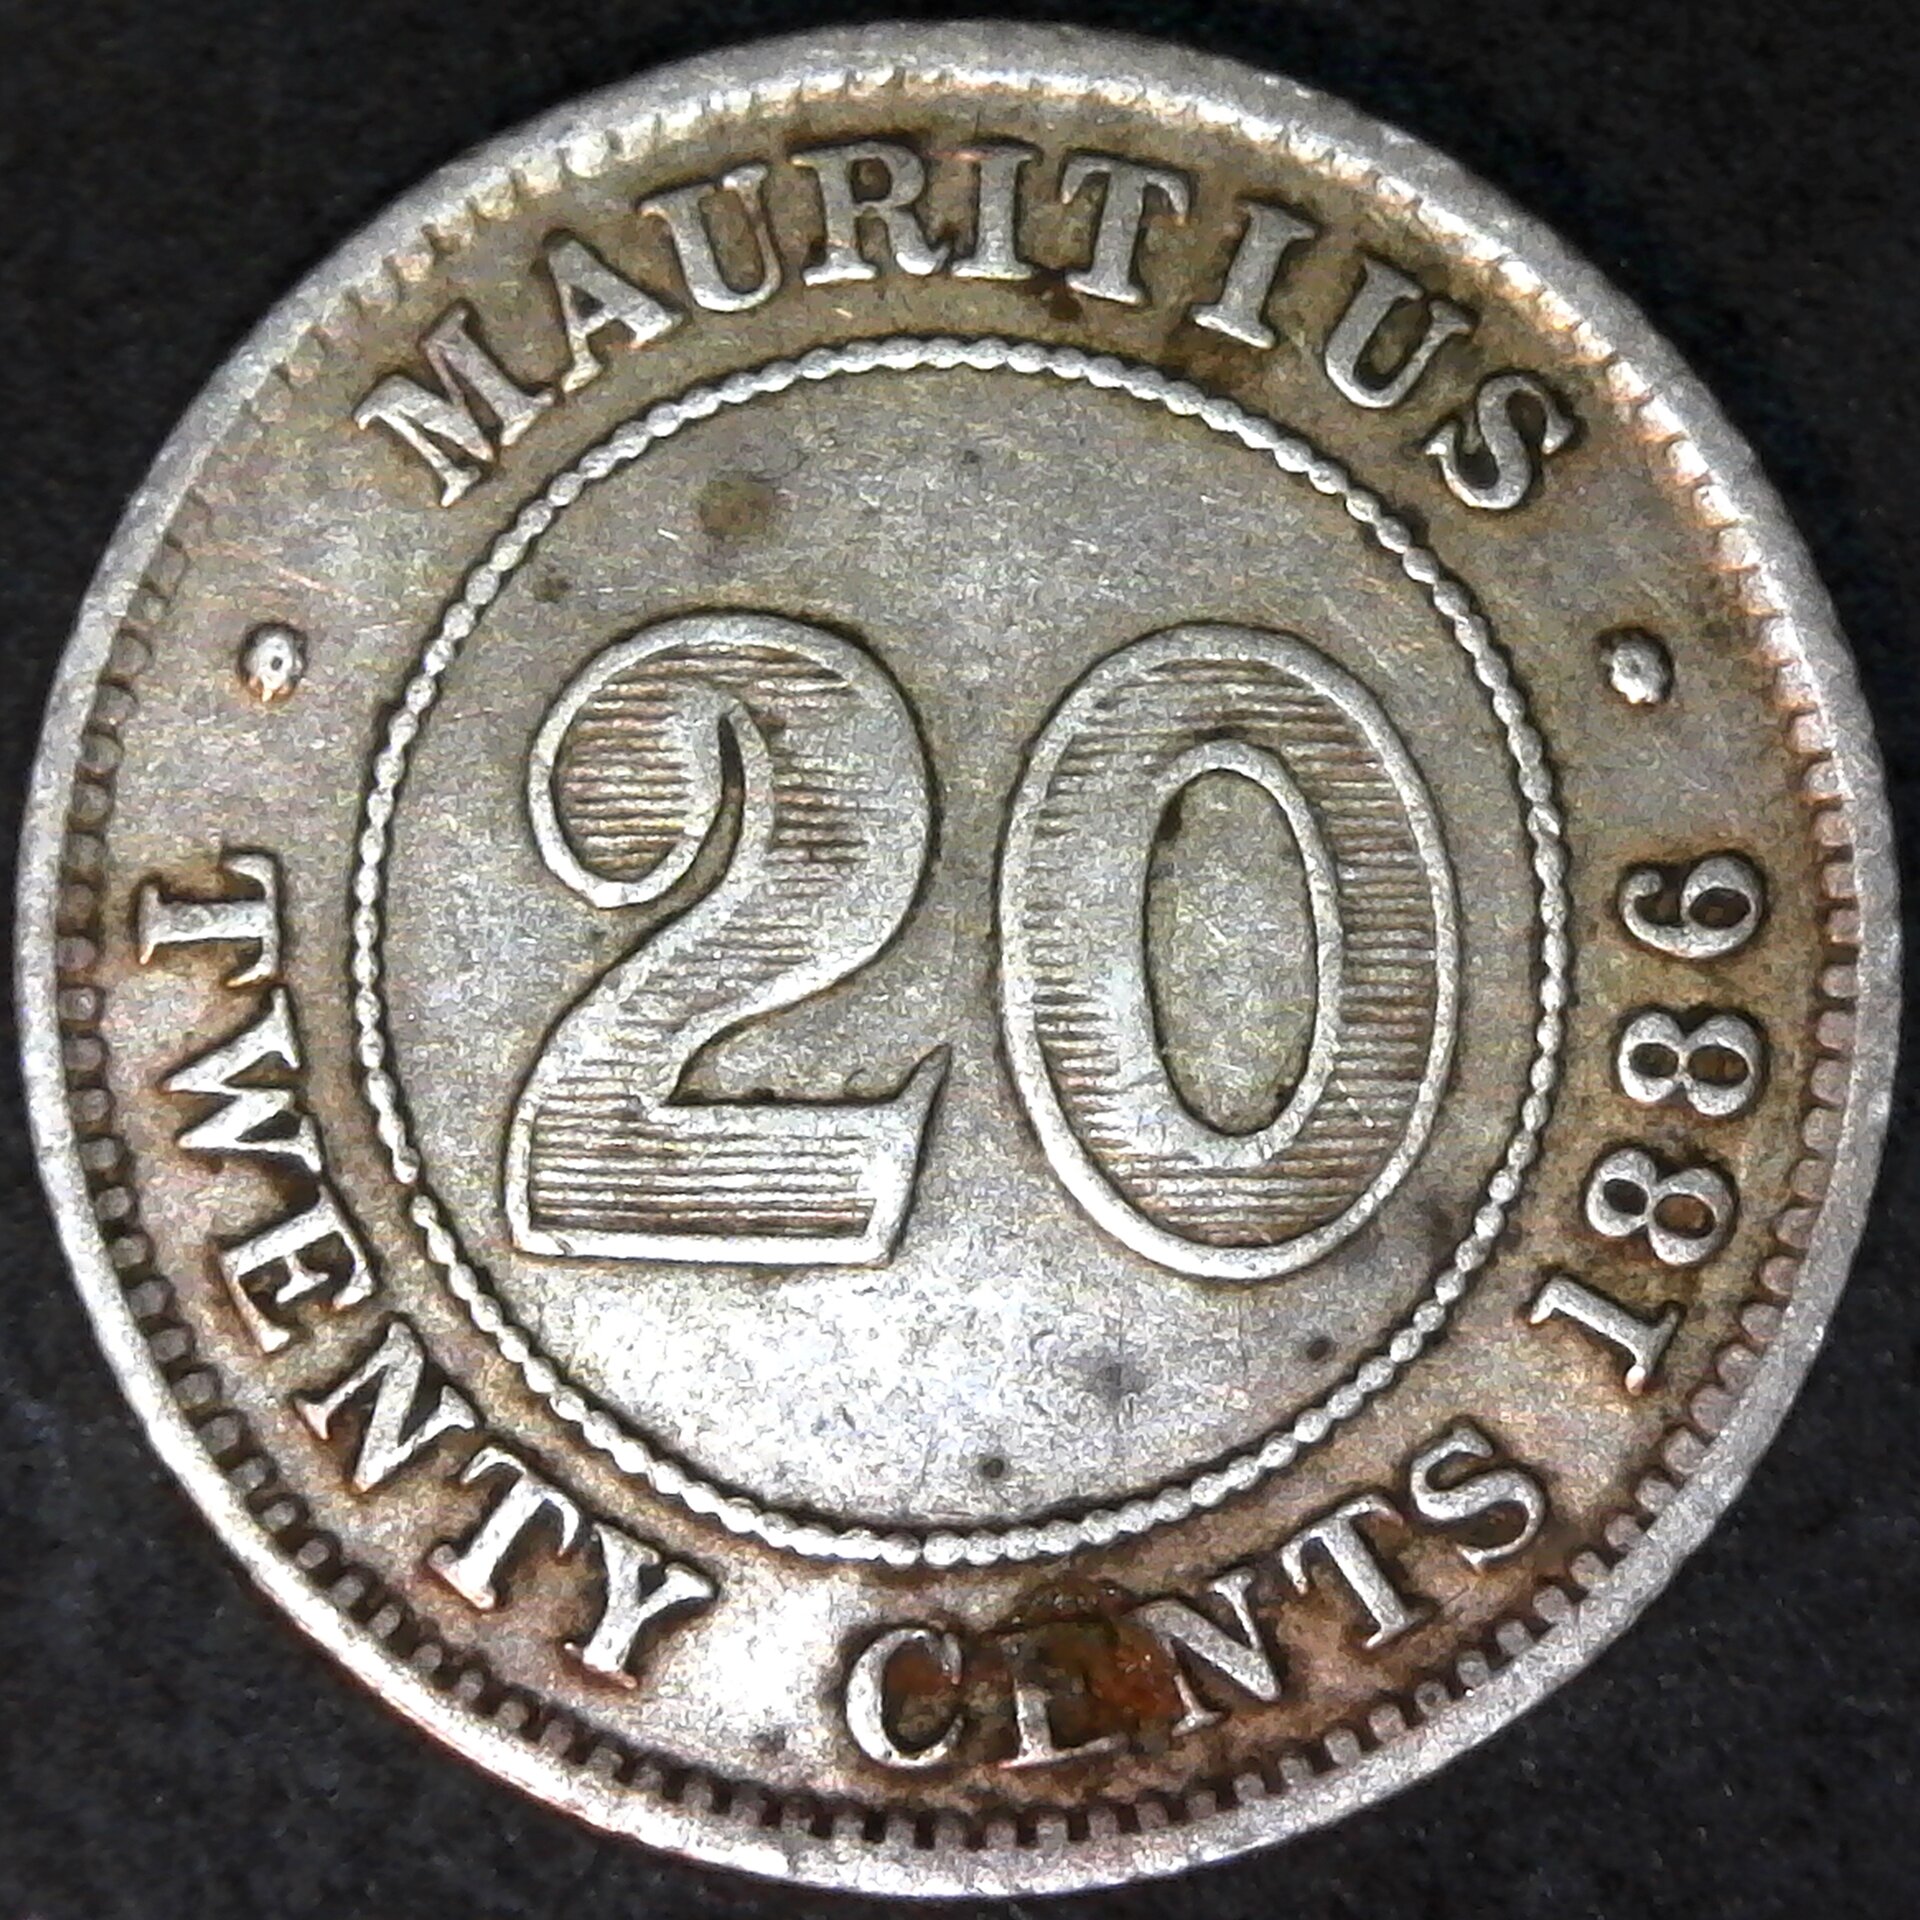 Mauritius Twenty Cents 1886 rev.jpg